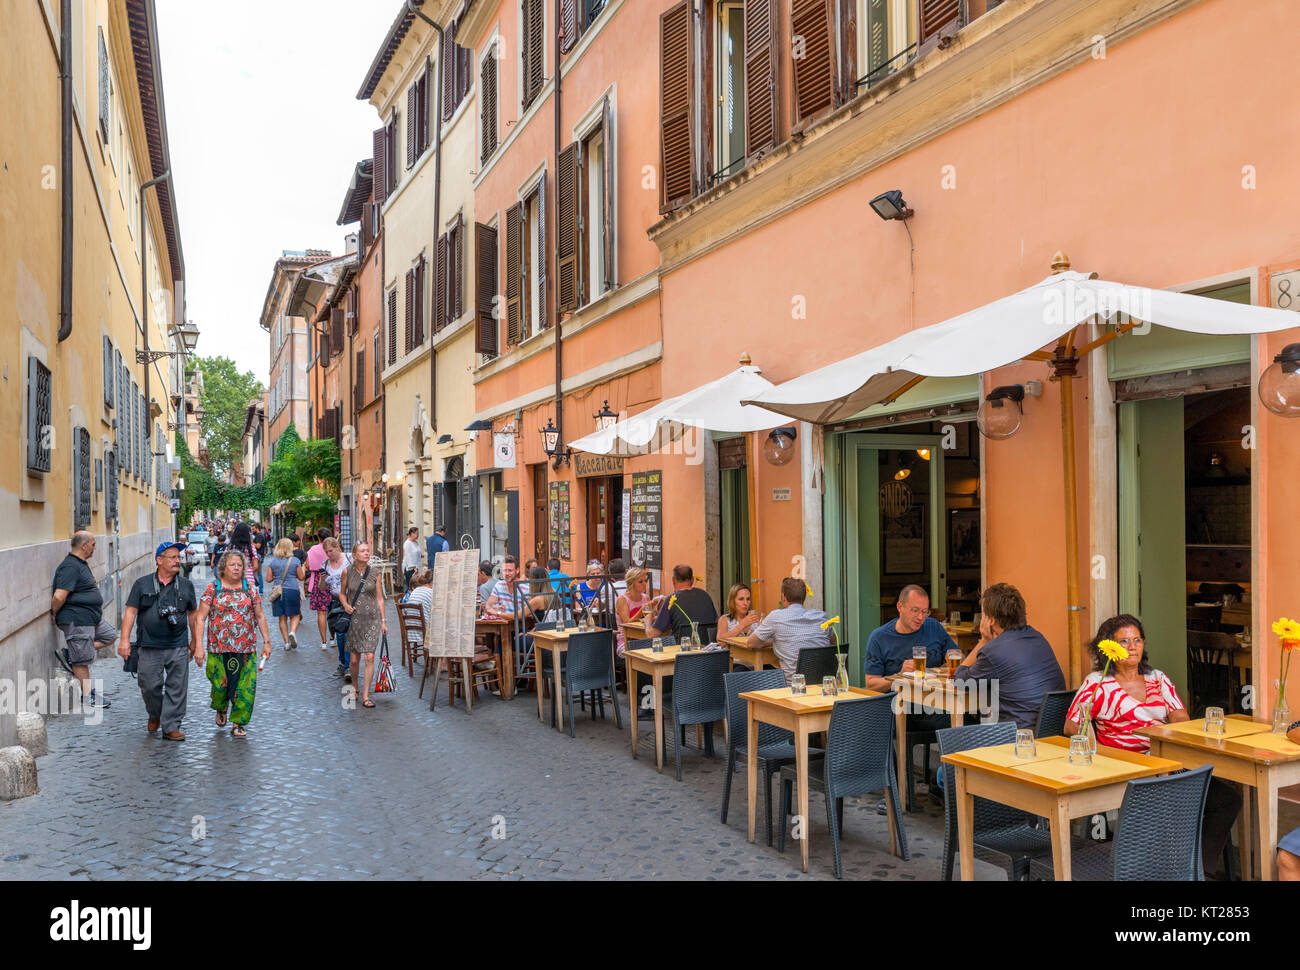 Terrasses de cafés et de restaurants sur la Via della Lungaretta, Trastevere, Rome, Italie Banque D'Images